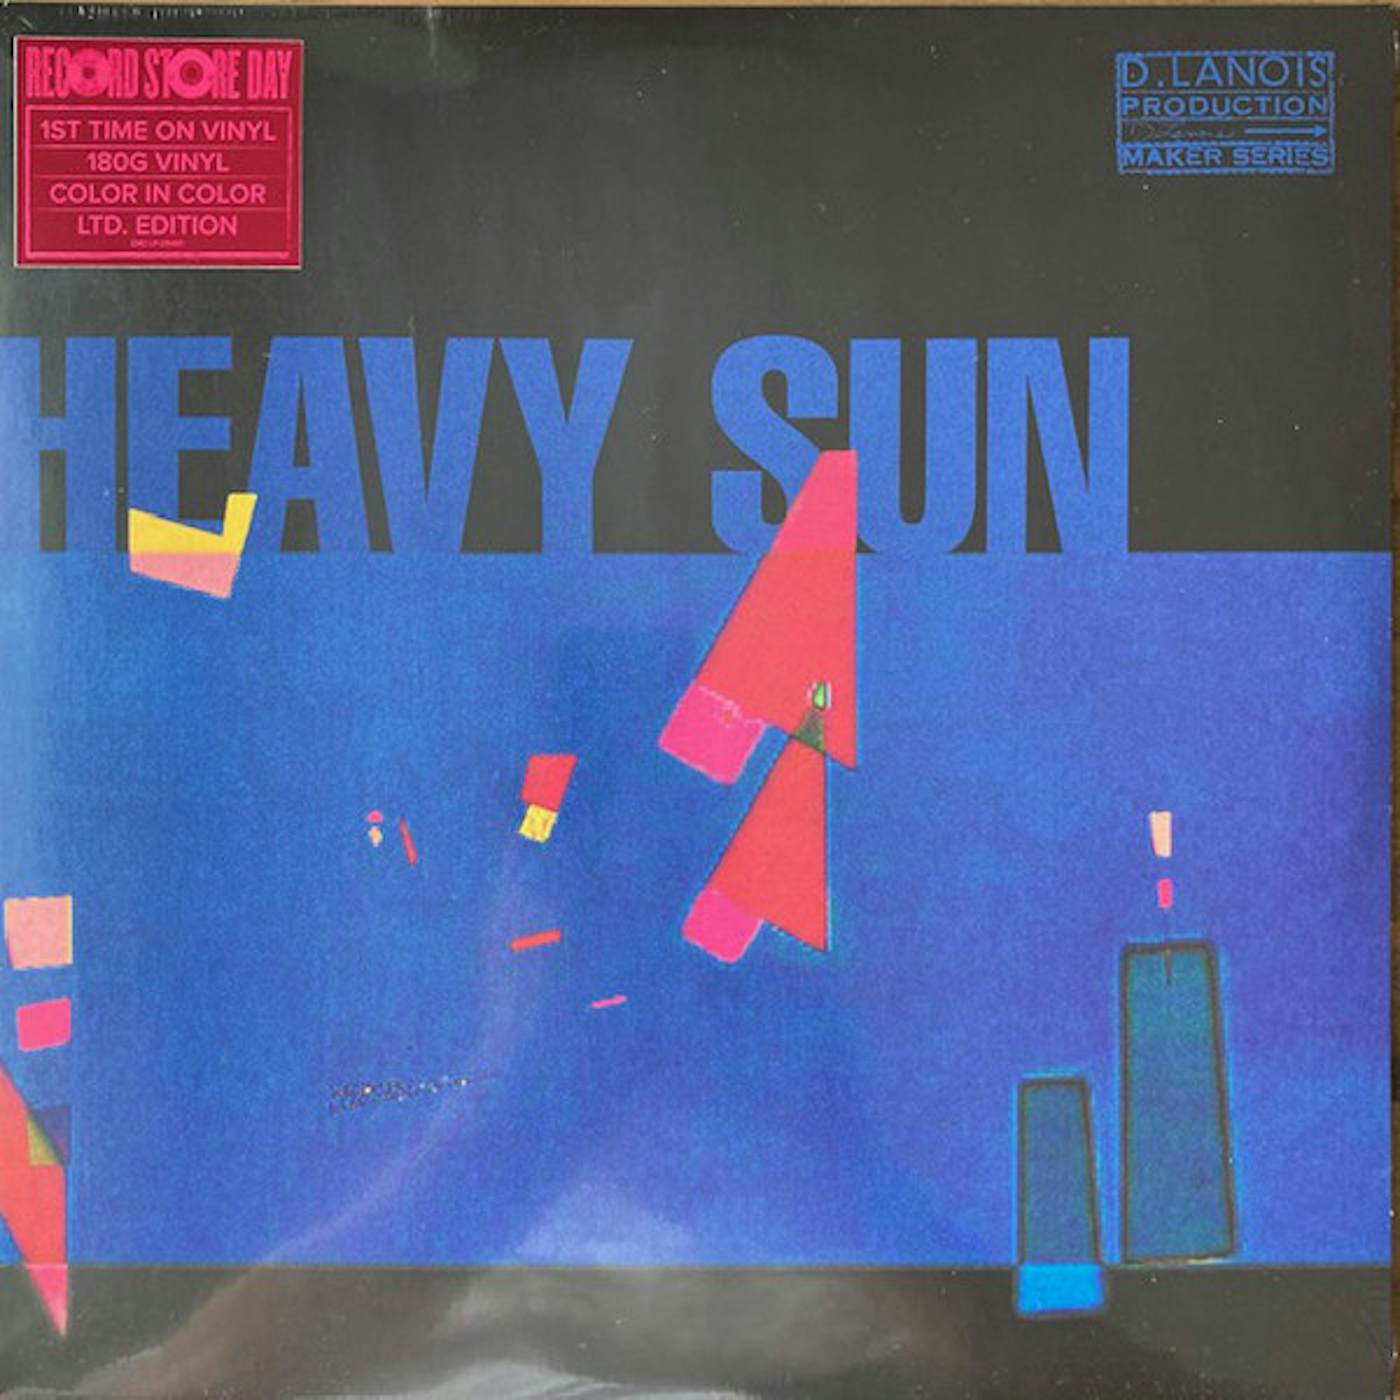 Daniel Lanois HEAVY SUN Vinyl Record